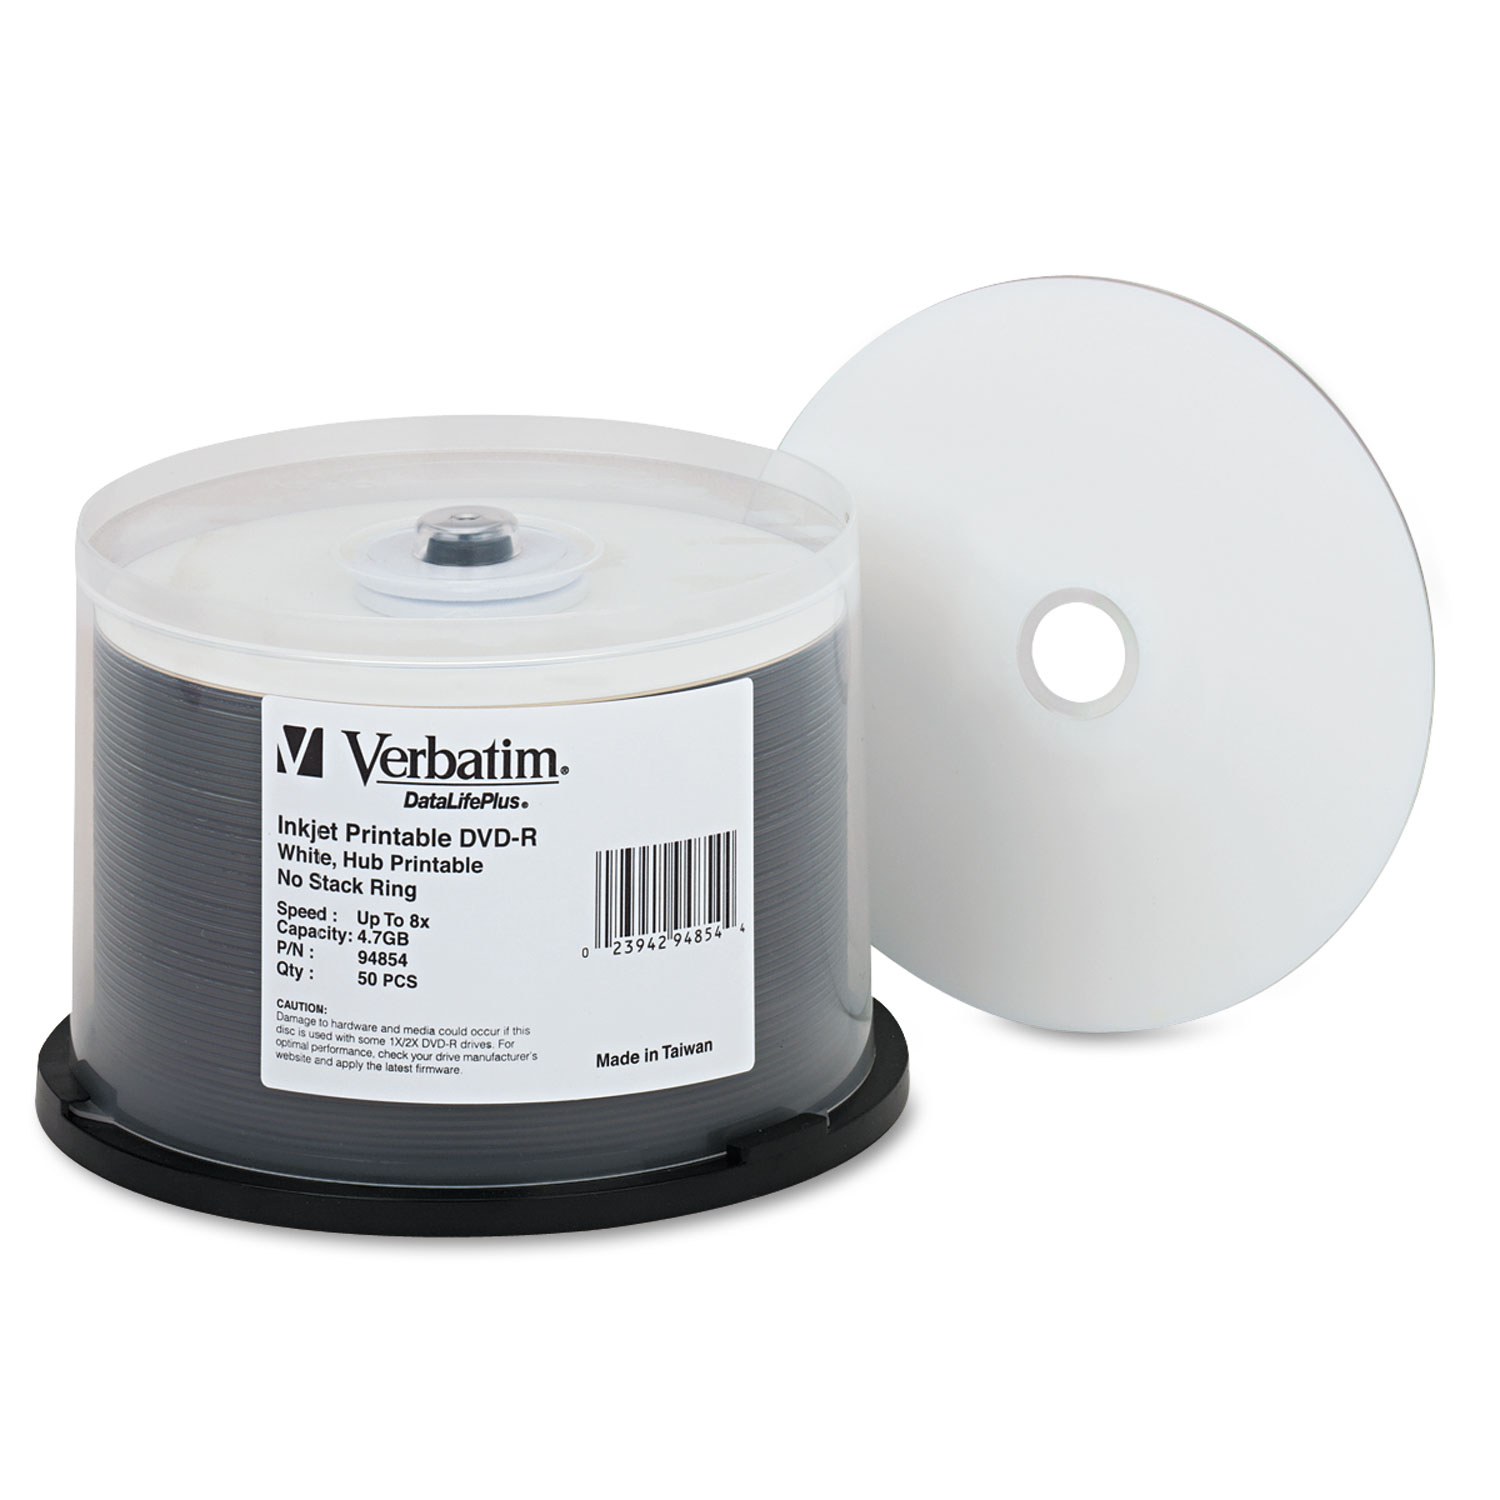  Verbatim 94854 DVD-R 4.7GB 8X DataLifePlus White Inkjet Printable/Hub Printable, 50/PK Spindle (VER94854) 